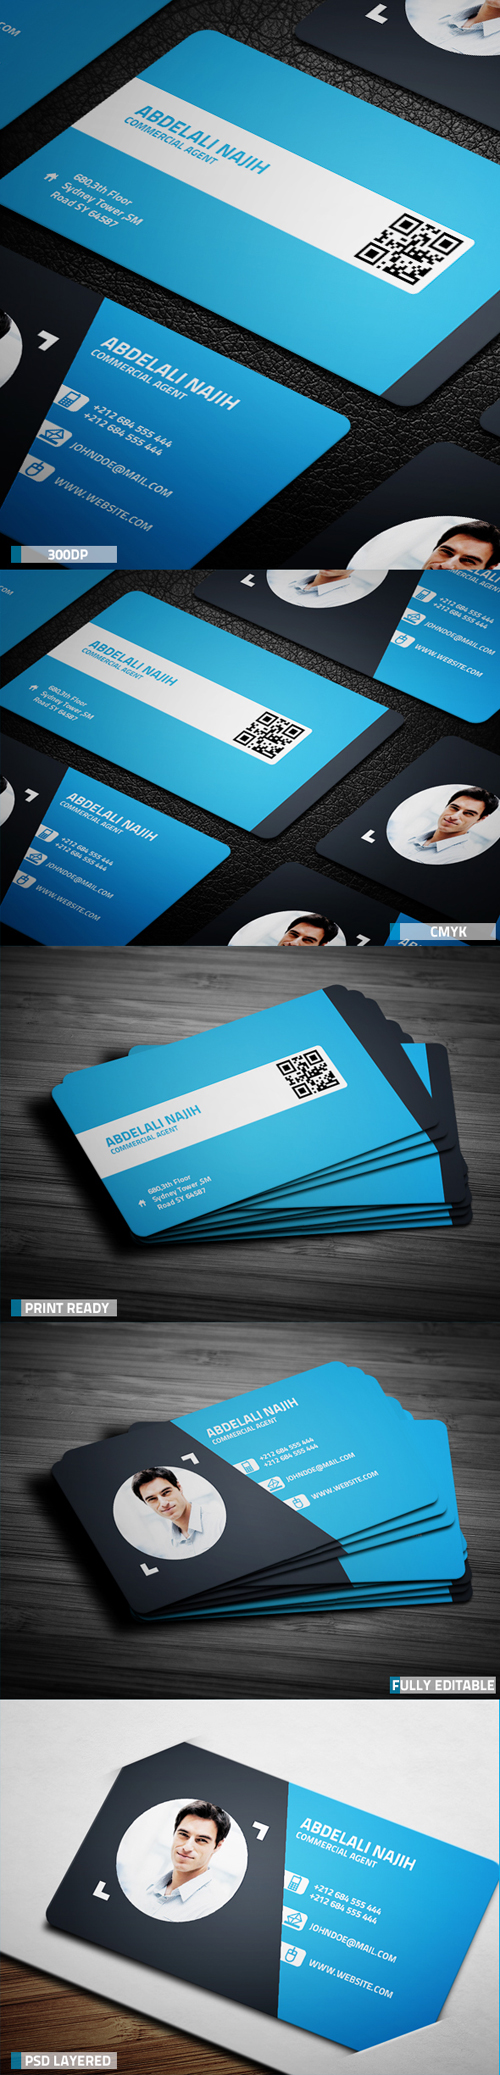 Business Card Templates (PSD) - 17